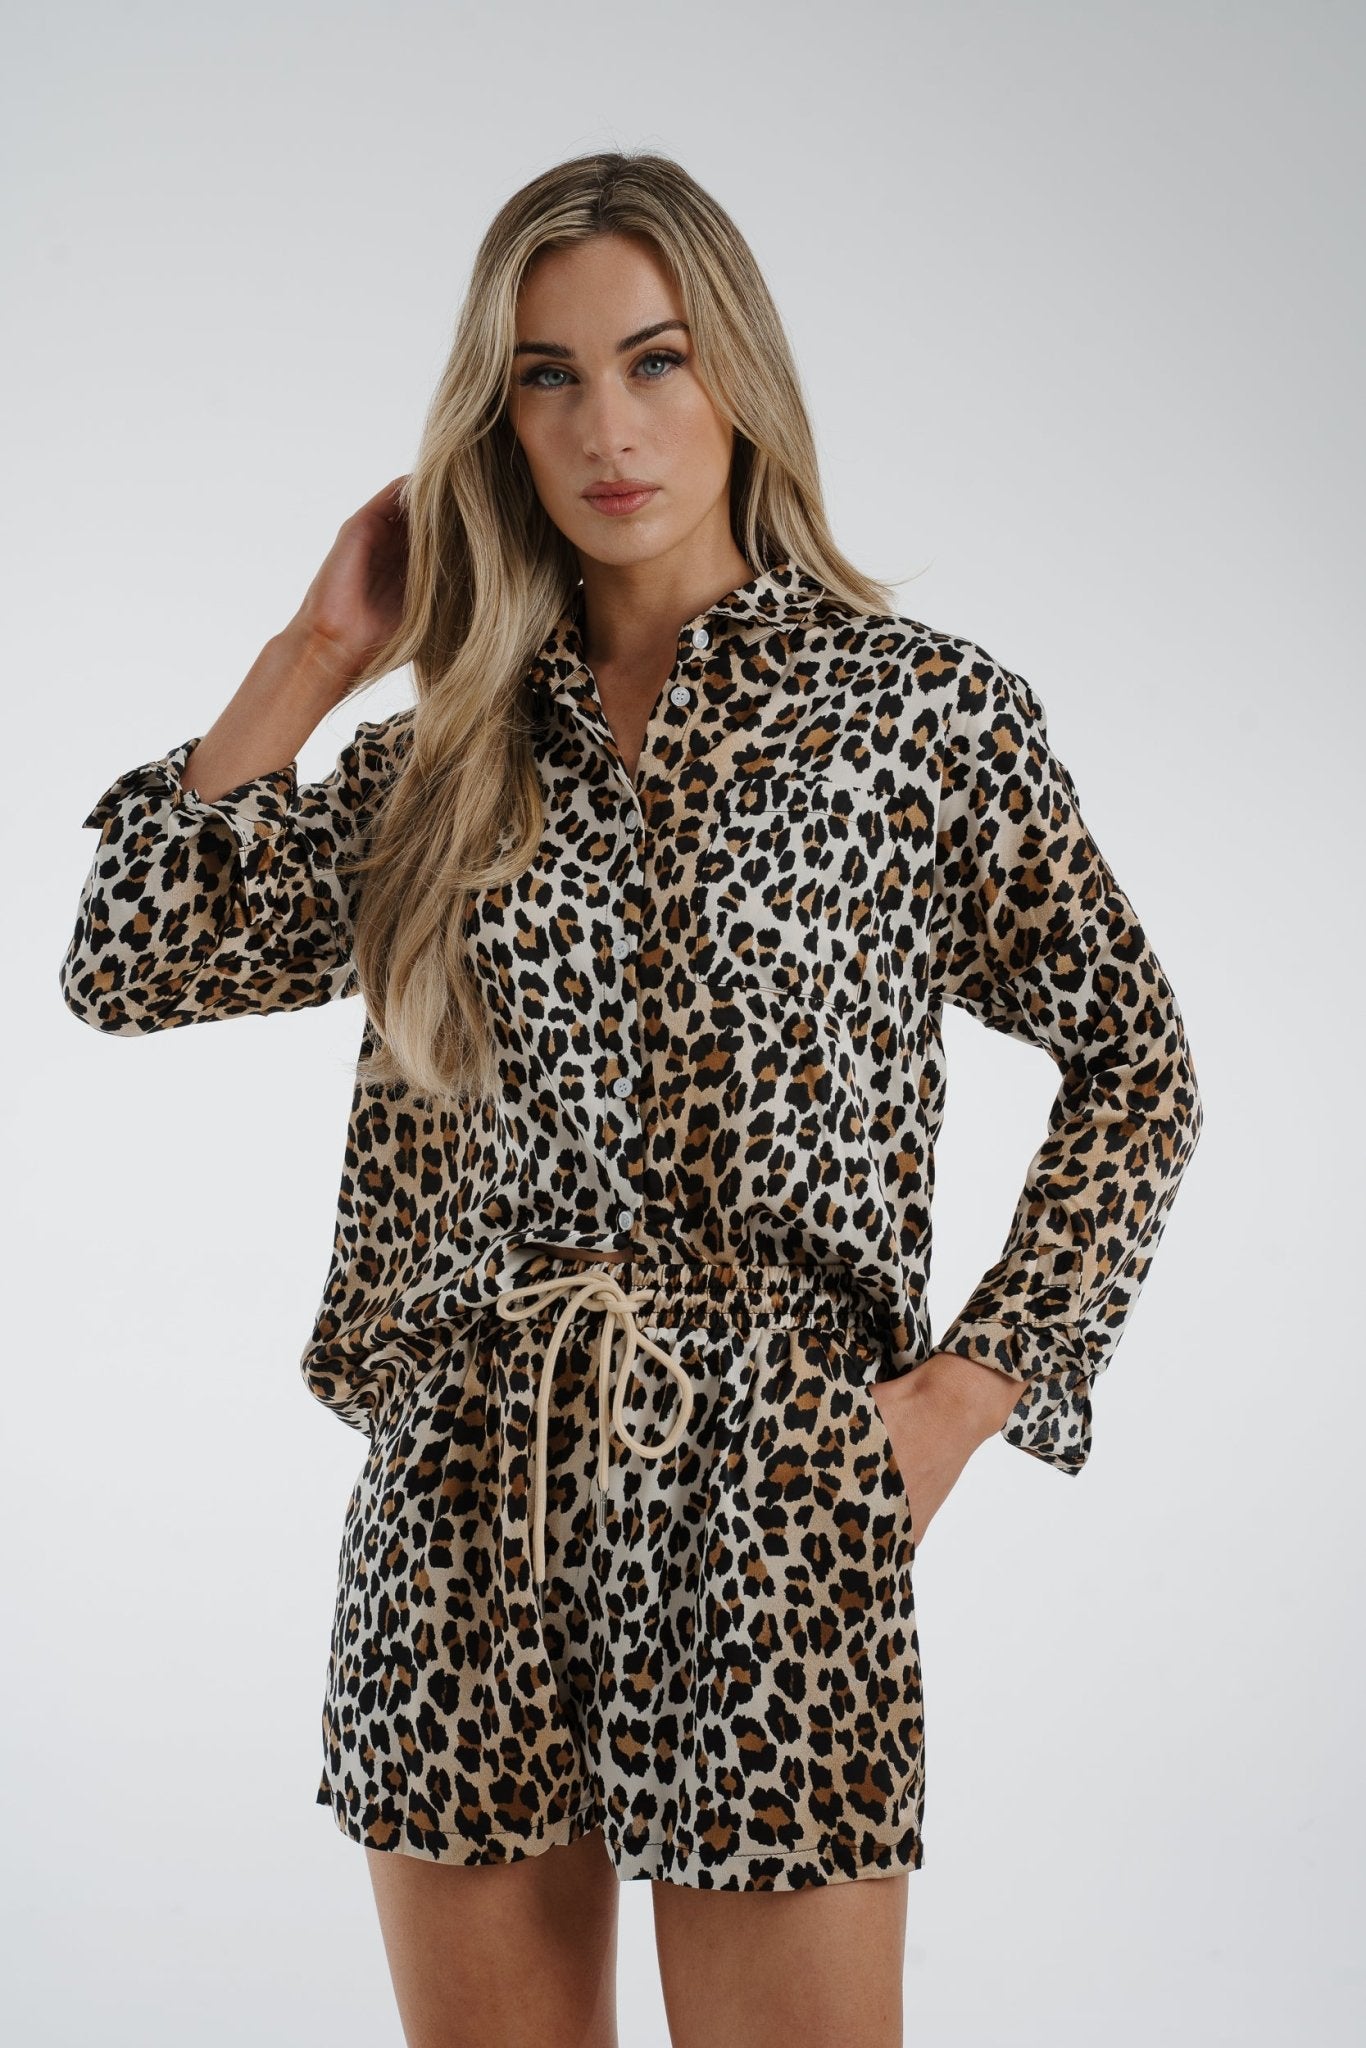 Ally Shirt In Leopard Print - The Walk in Wardrobe